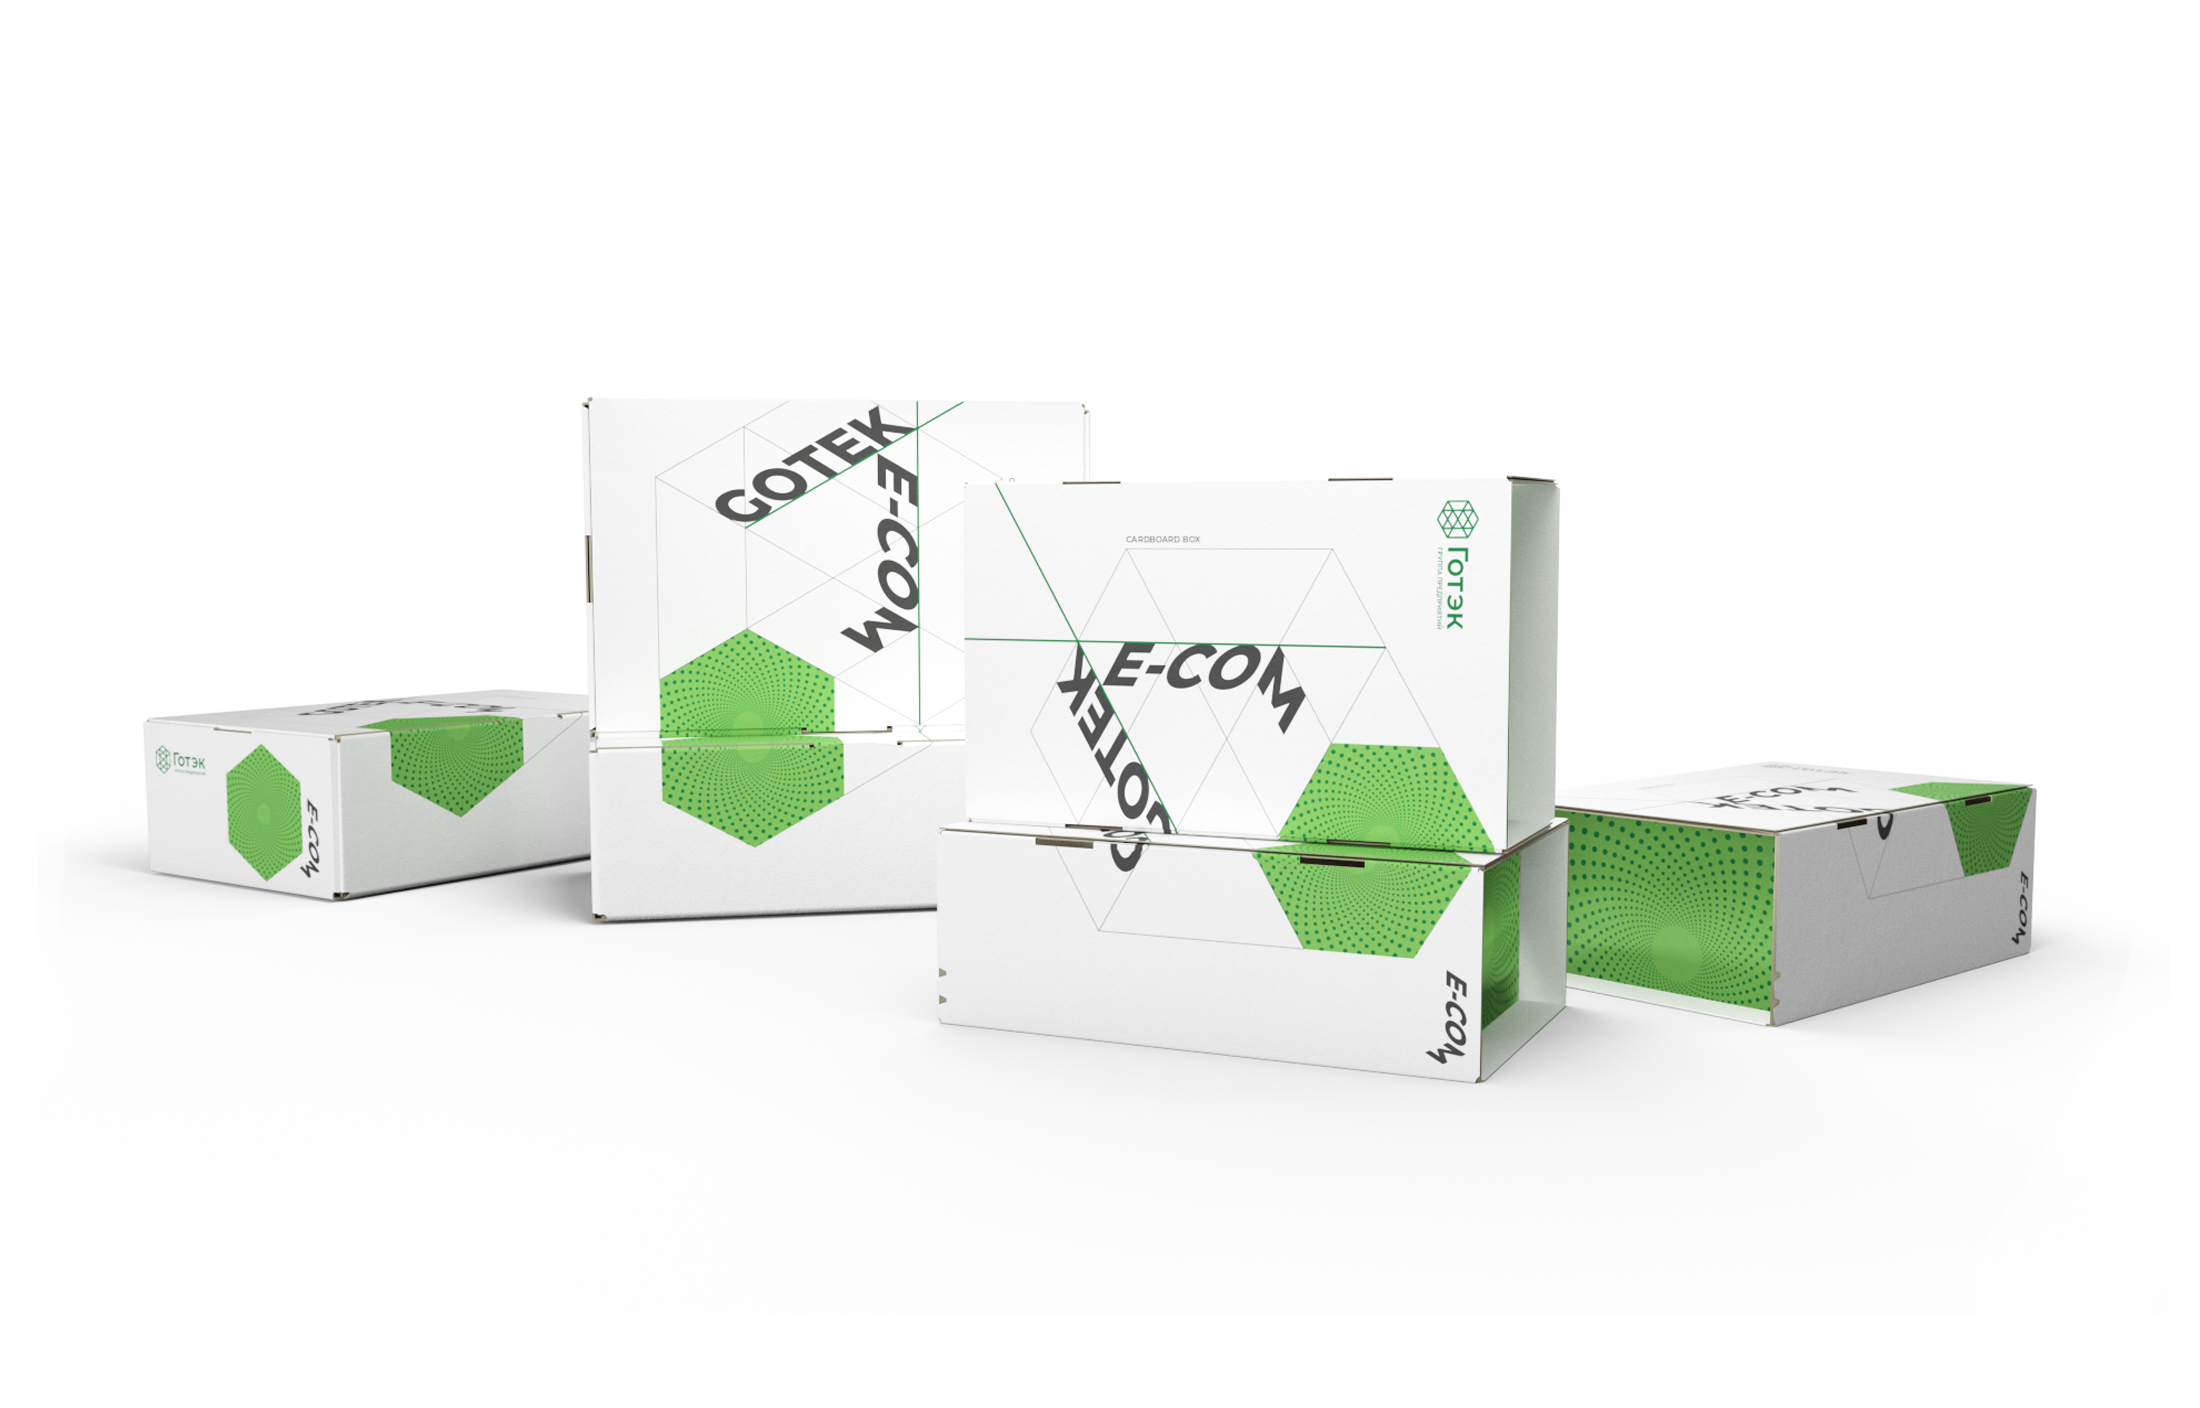 Fourth Dimension: Development of the Packaging Design Concept for “Gotek”